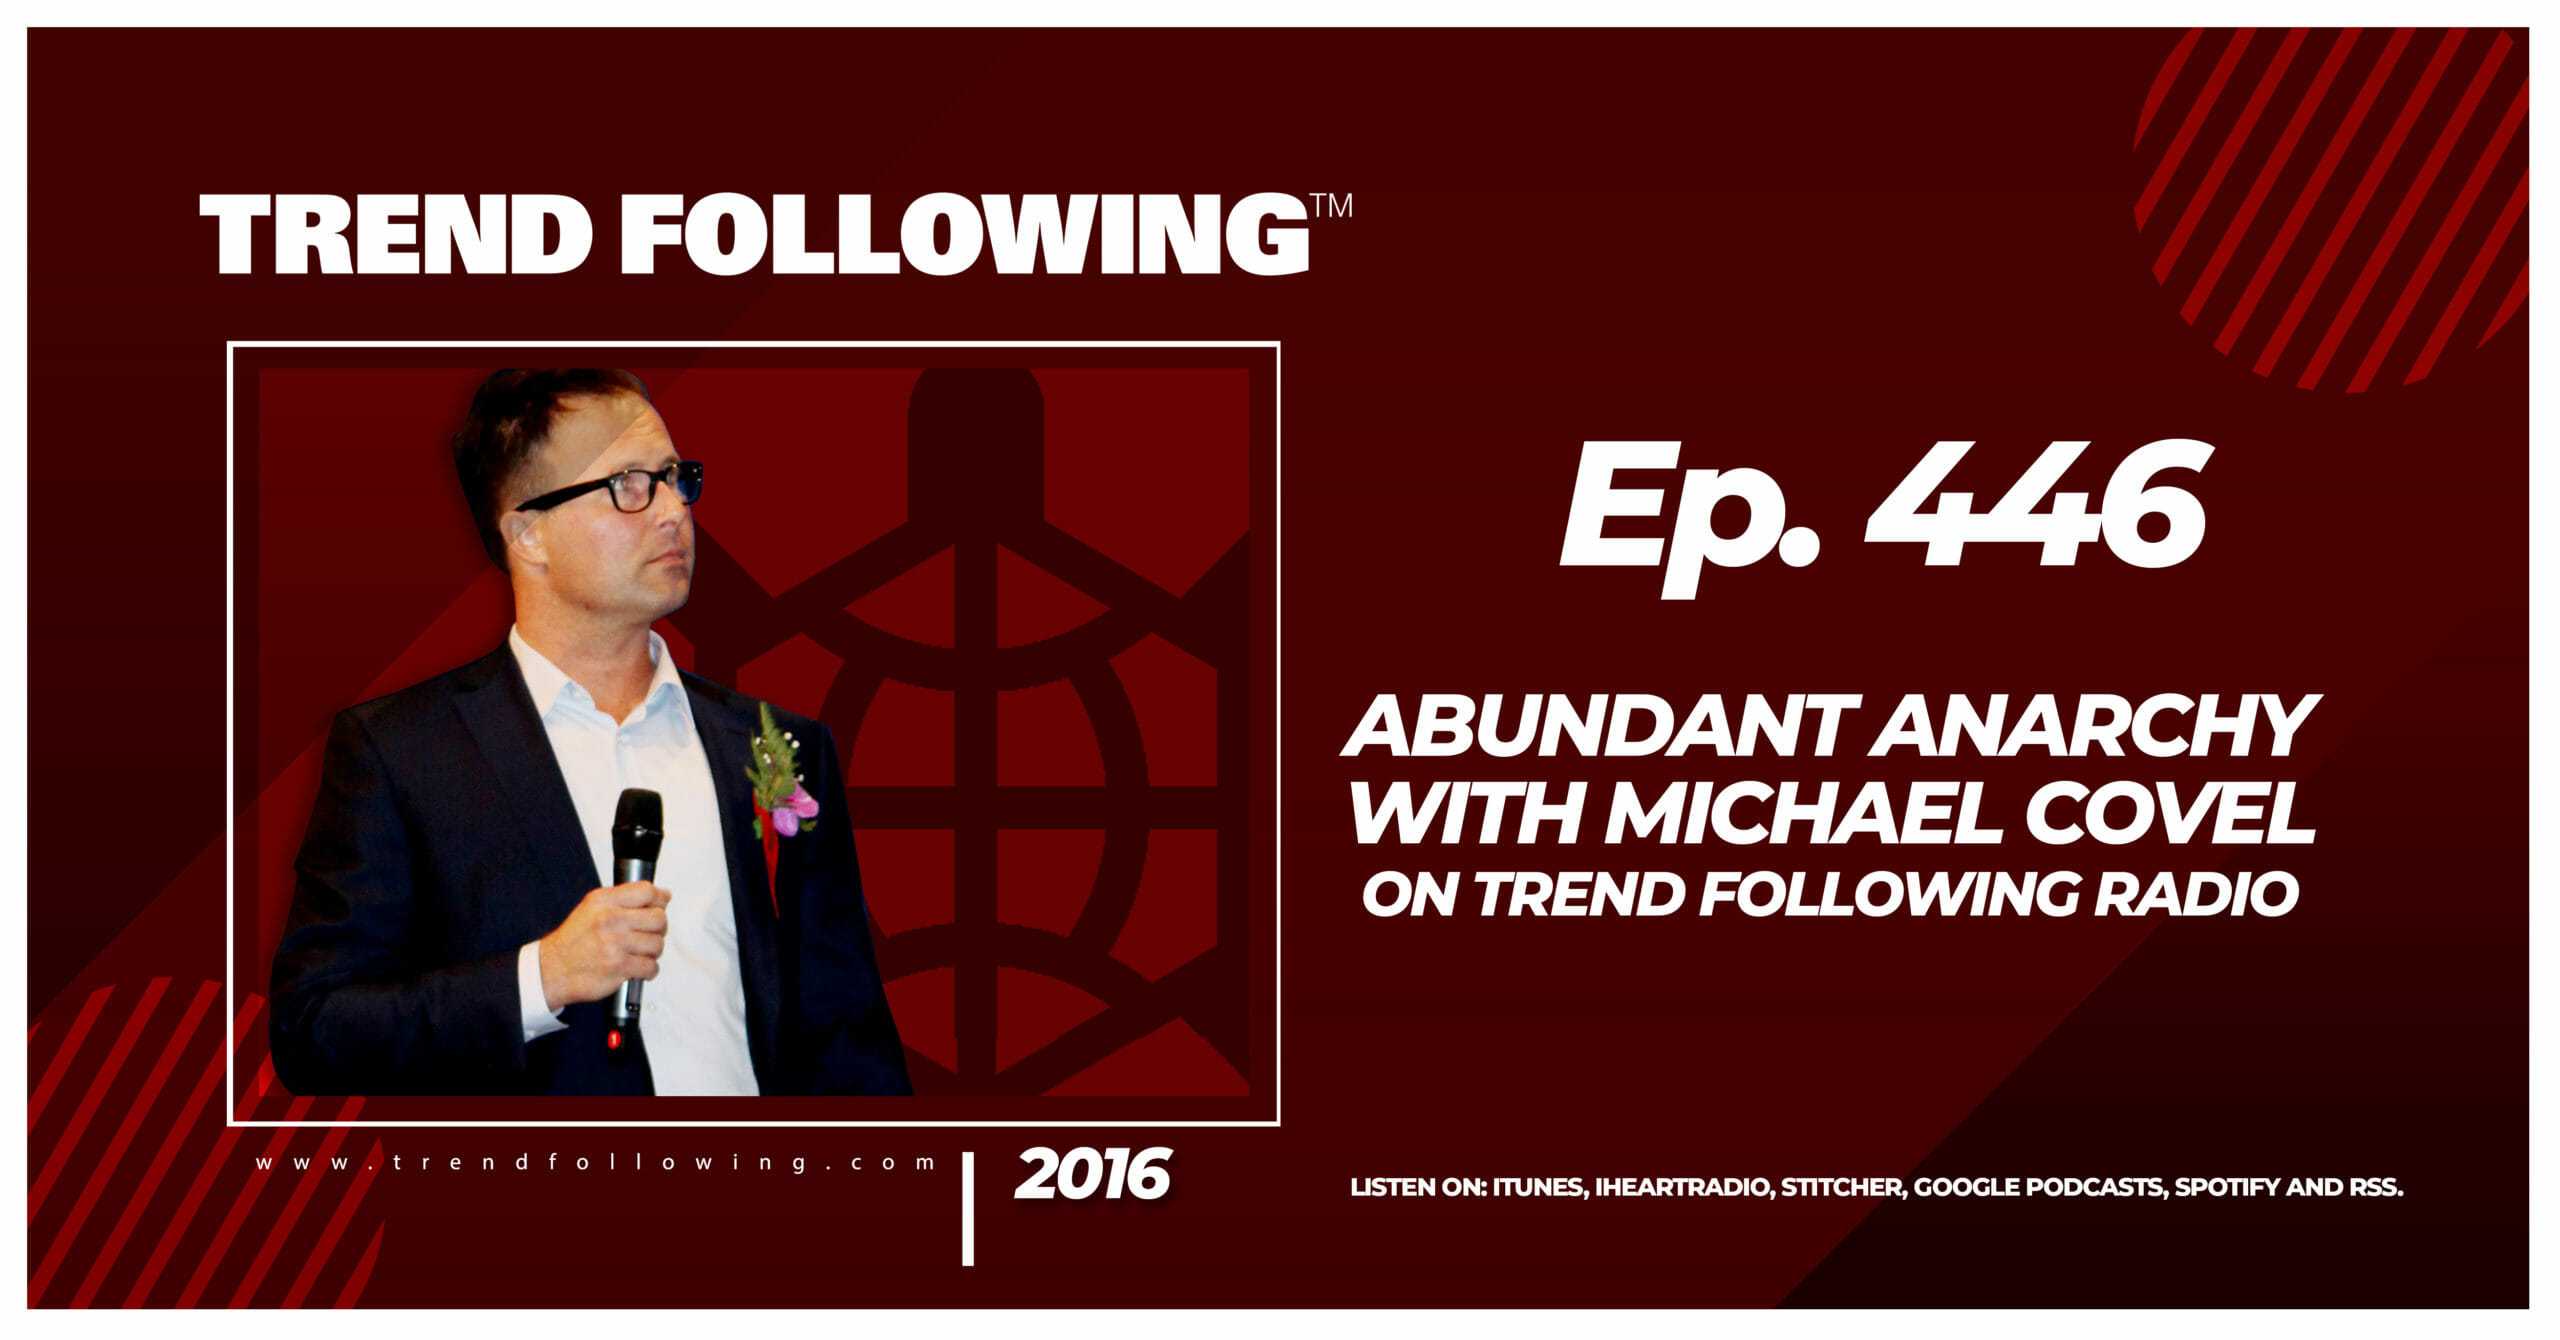 Abundant Anarchy with Michael Covel on Trend Following Radio